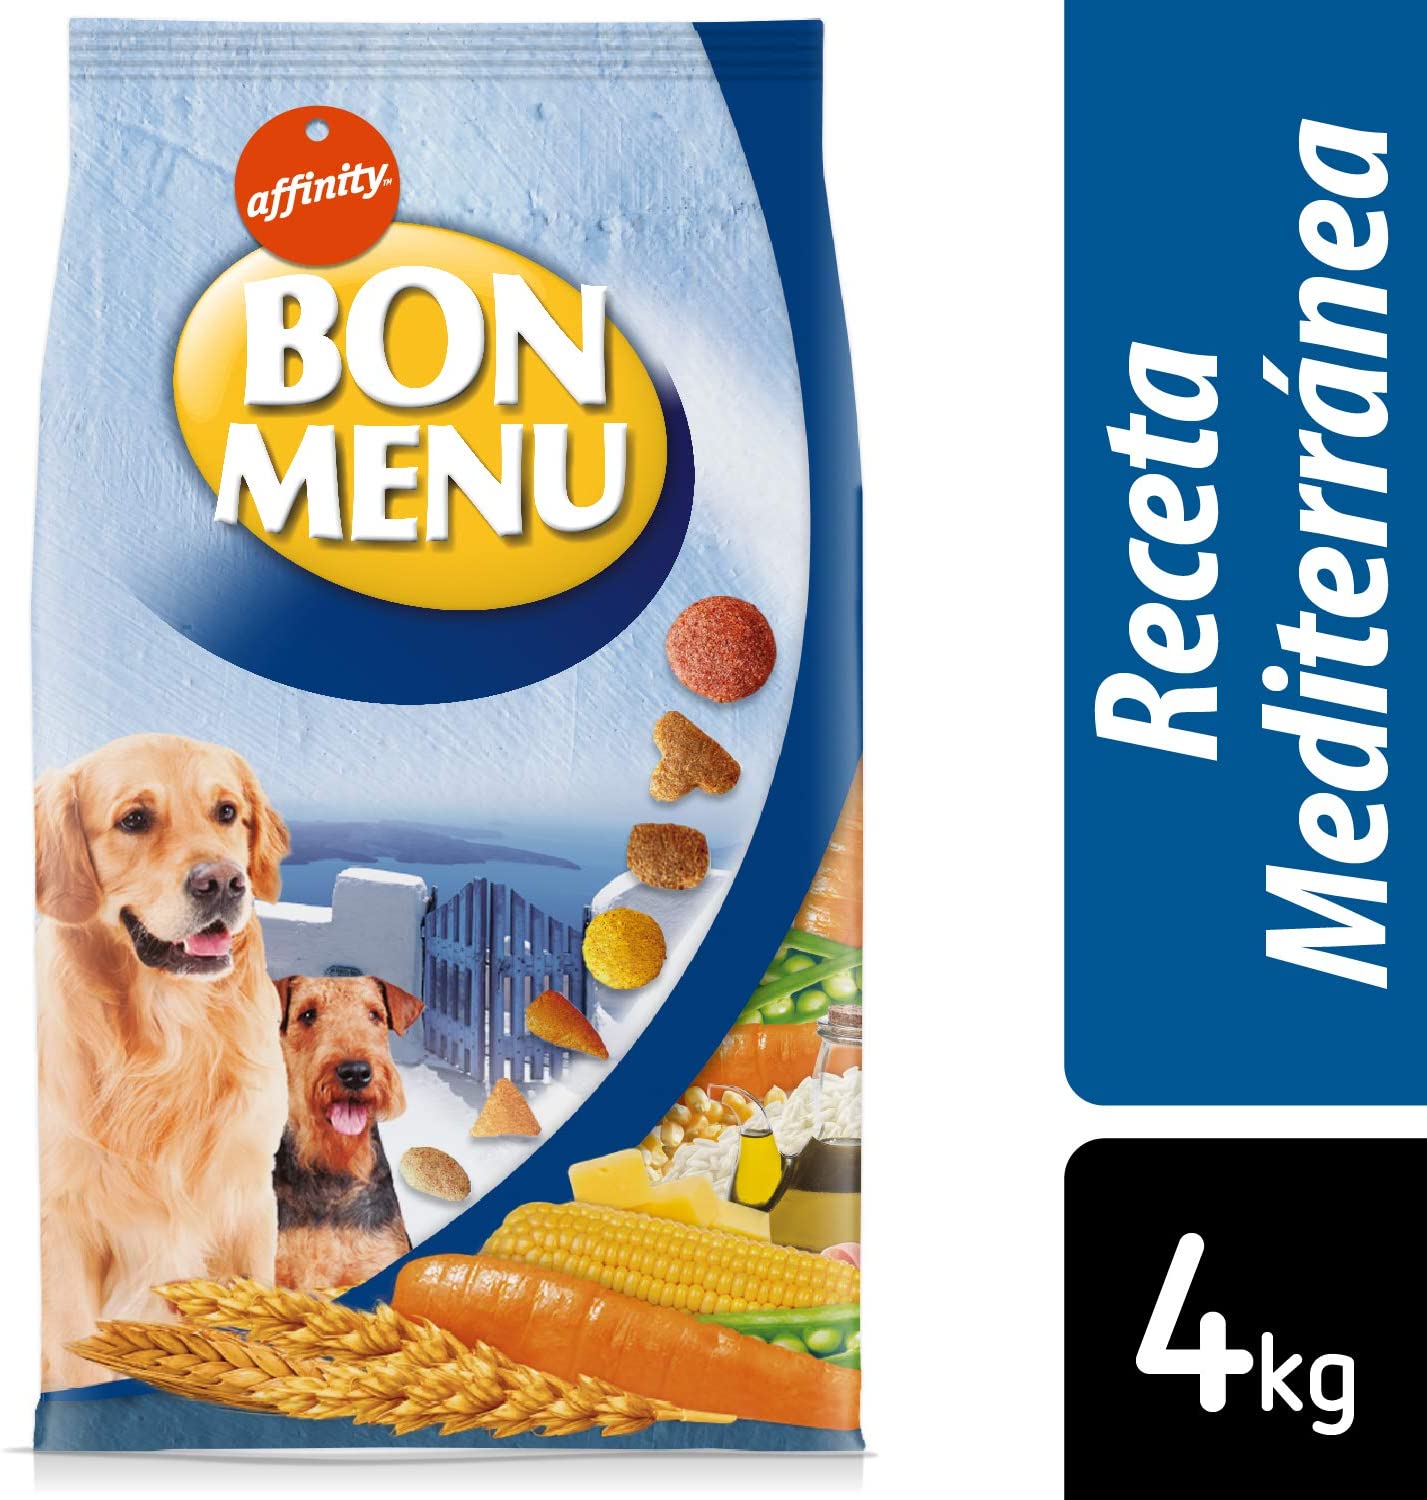  affinity Bon Menu - Receta Mediterránea - Alimento Completo para Perros Adultos - 4 Kg 